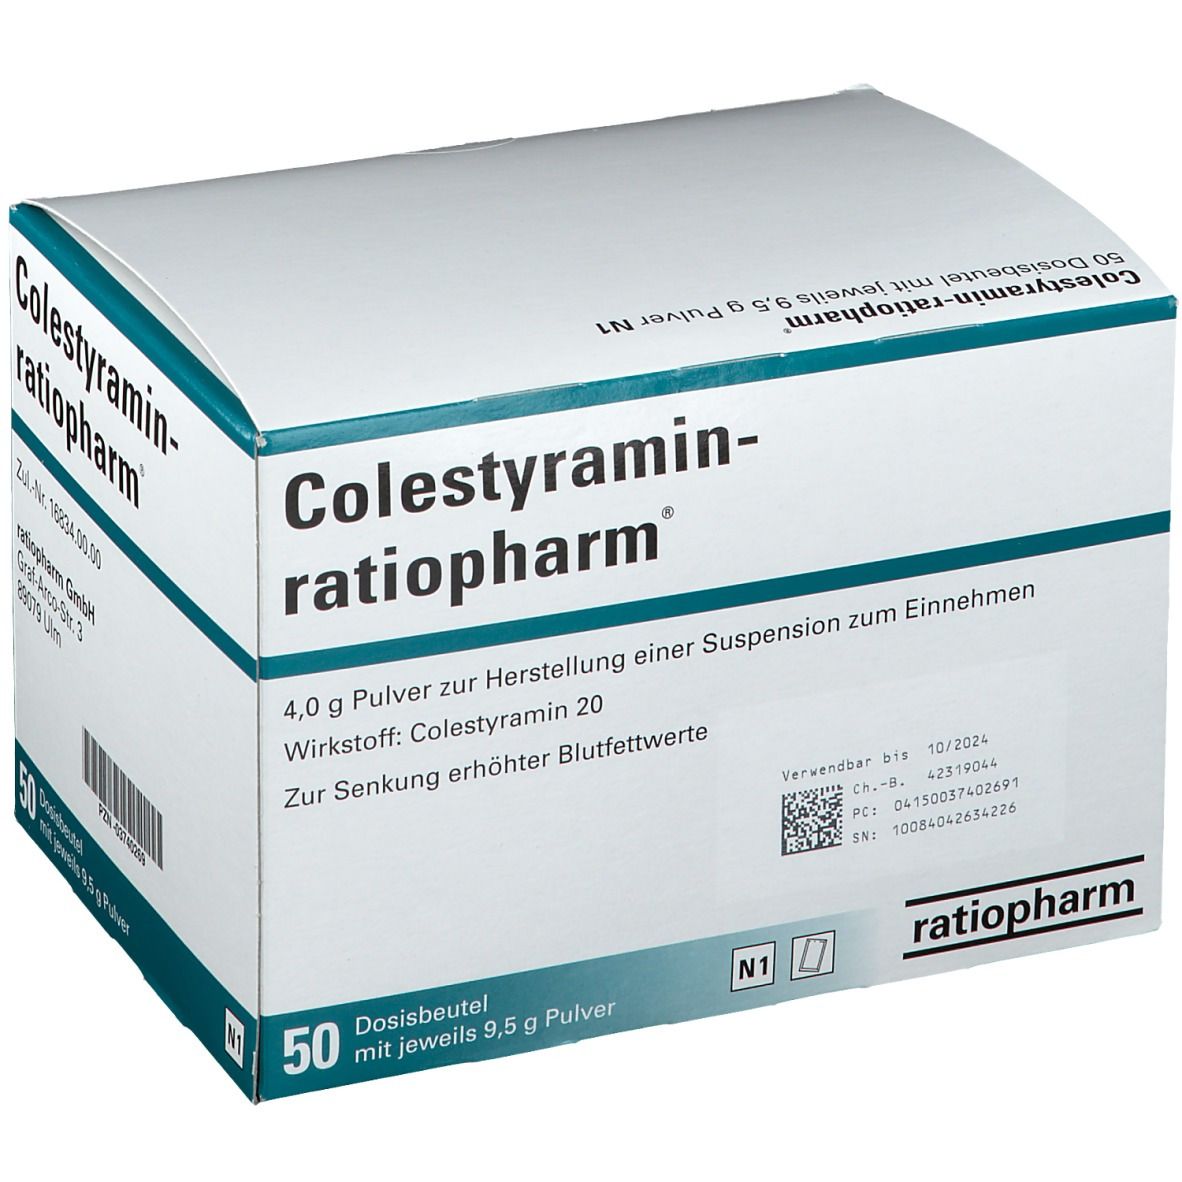 Colestyramin-ratiopharm®